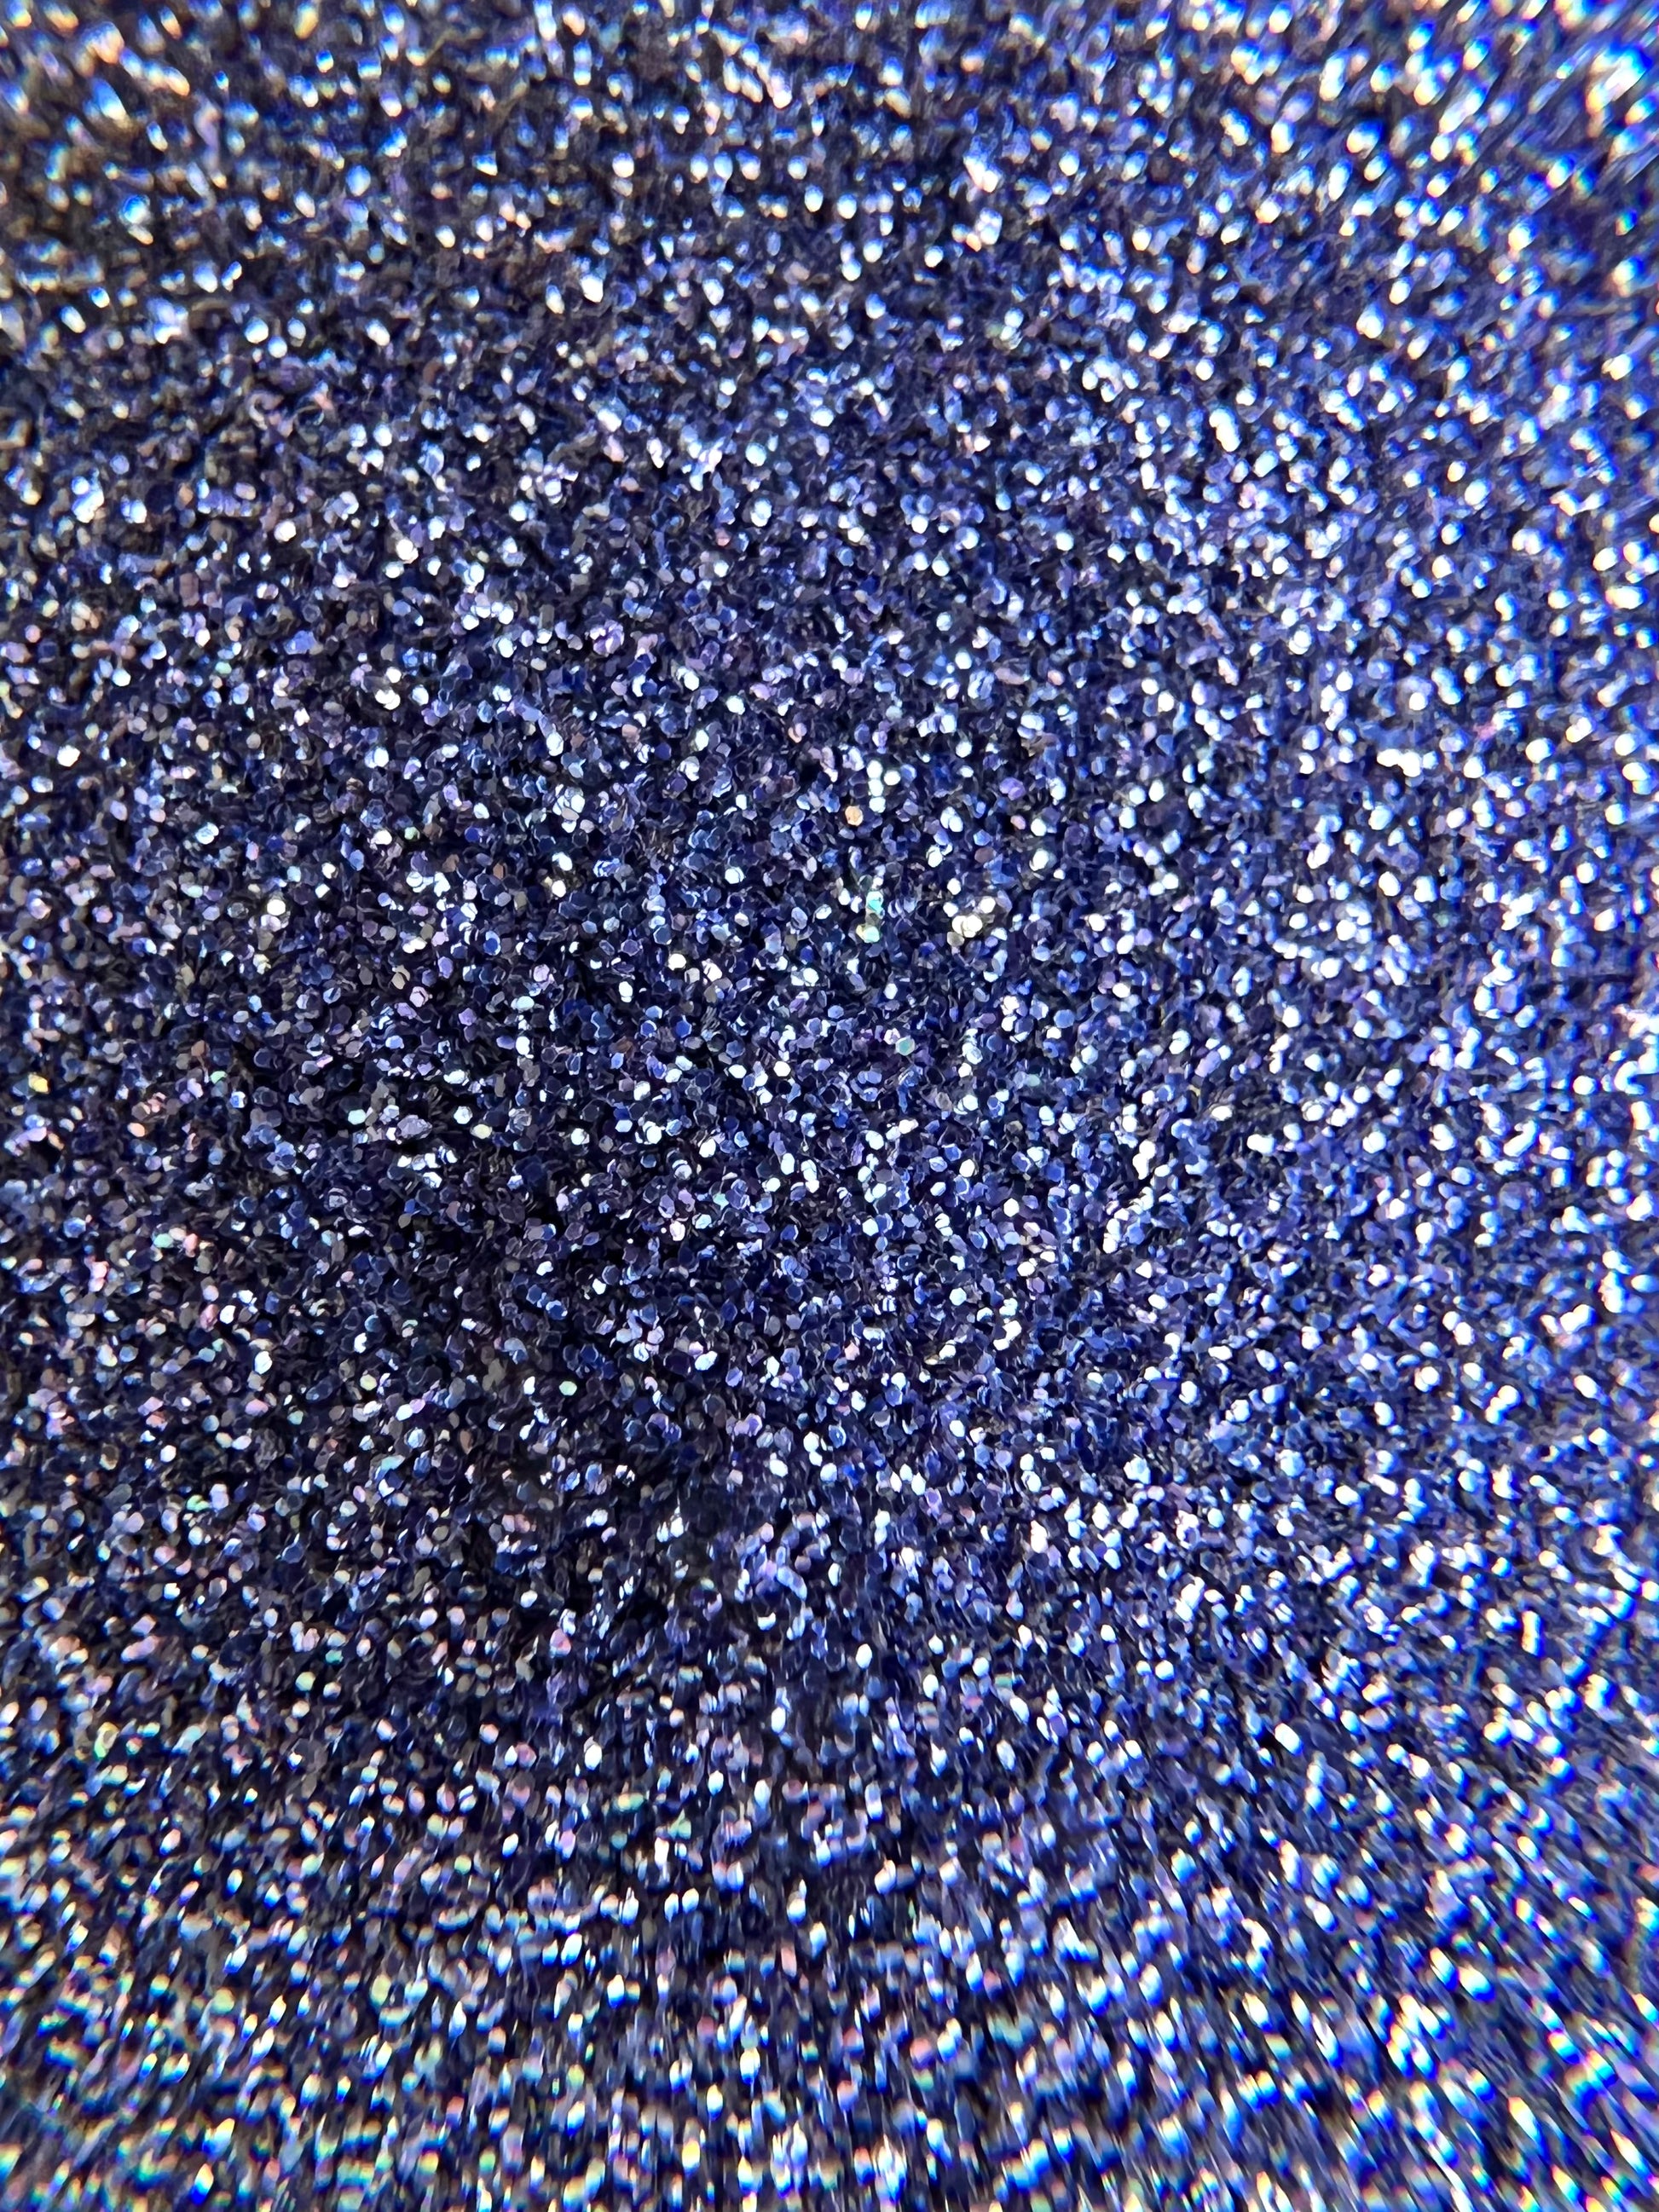 Deep Purple Ultra Fine Biodegradable Glitter